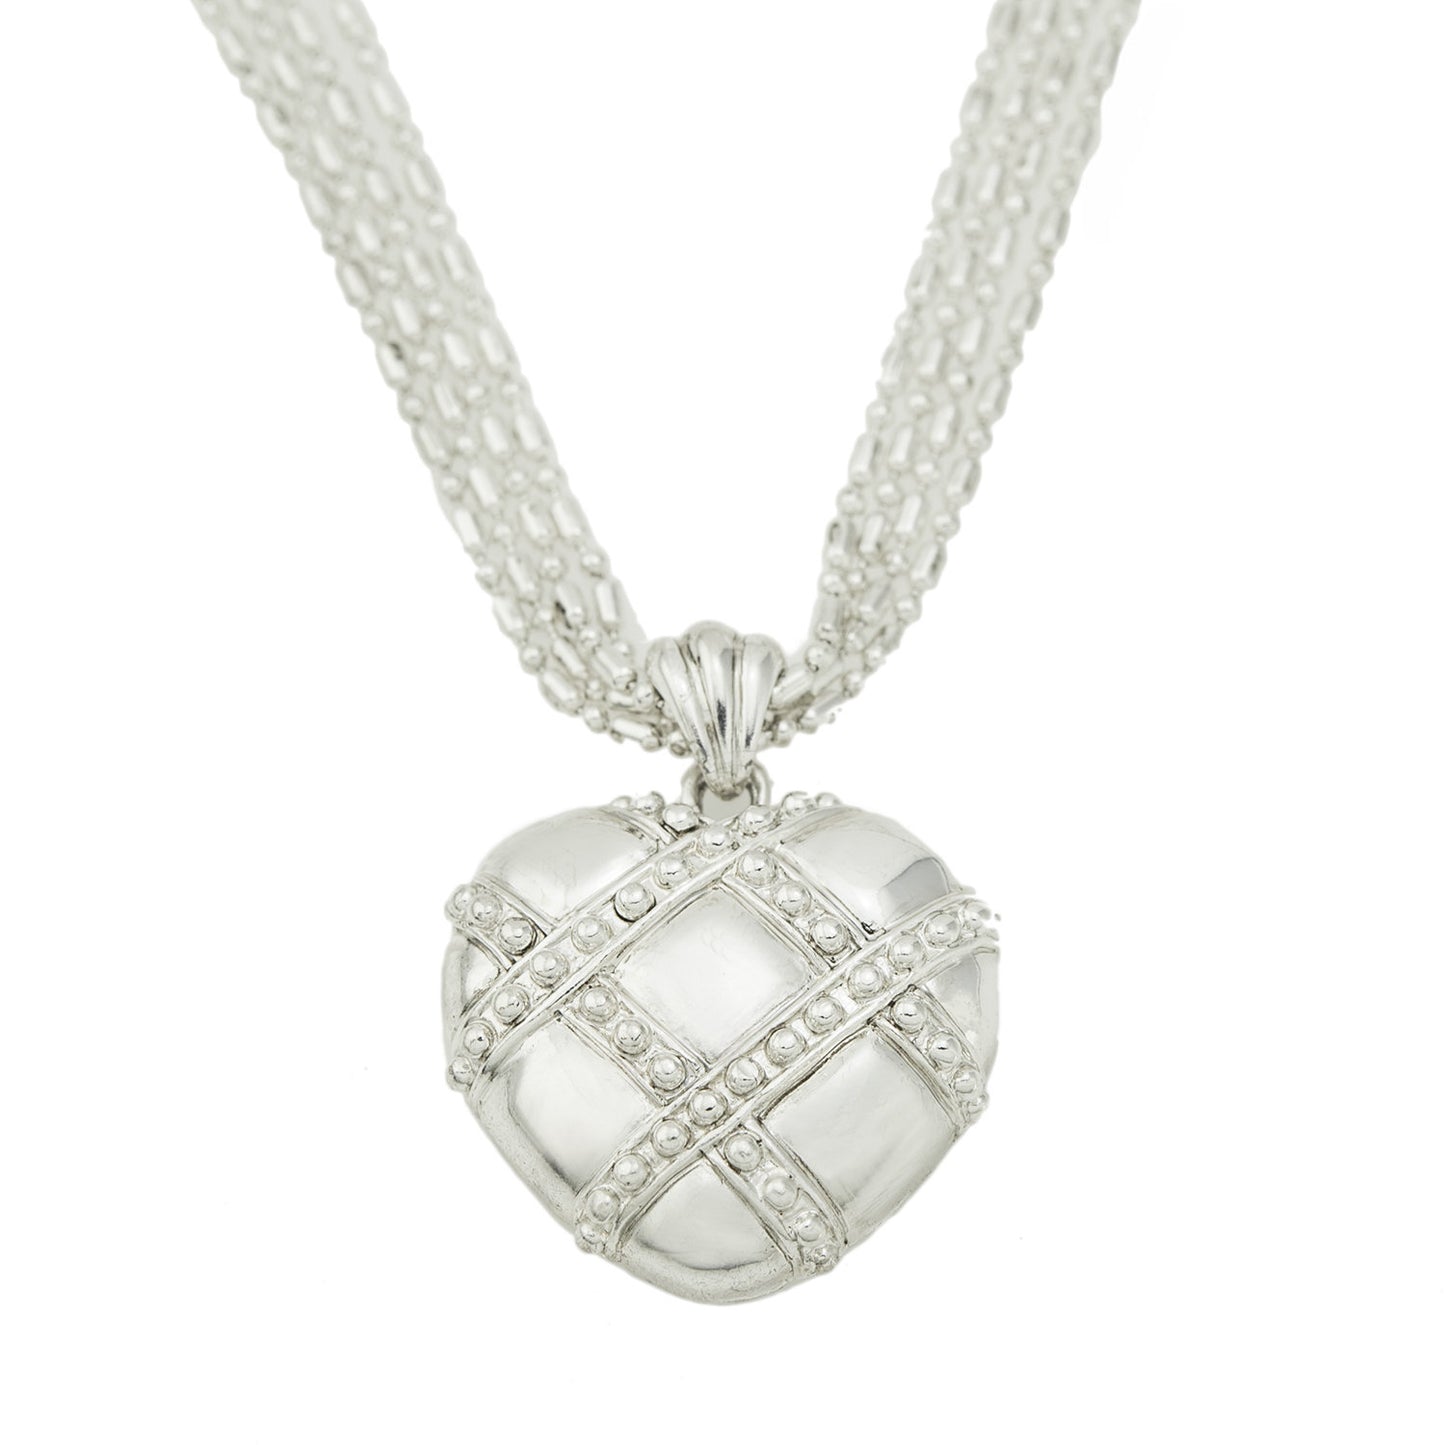 Vintage Oscar De La Renta 24 Inch White Gold Silver Tone Heart Pendant Necklace #OSN-4619-W